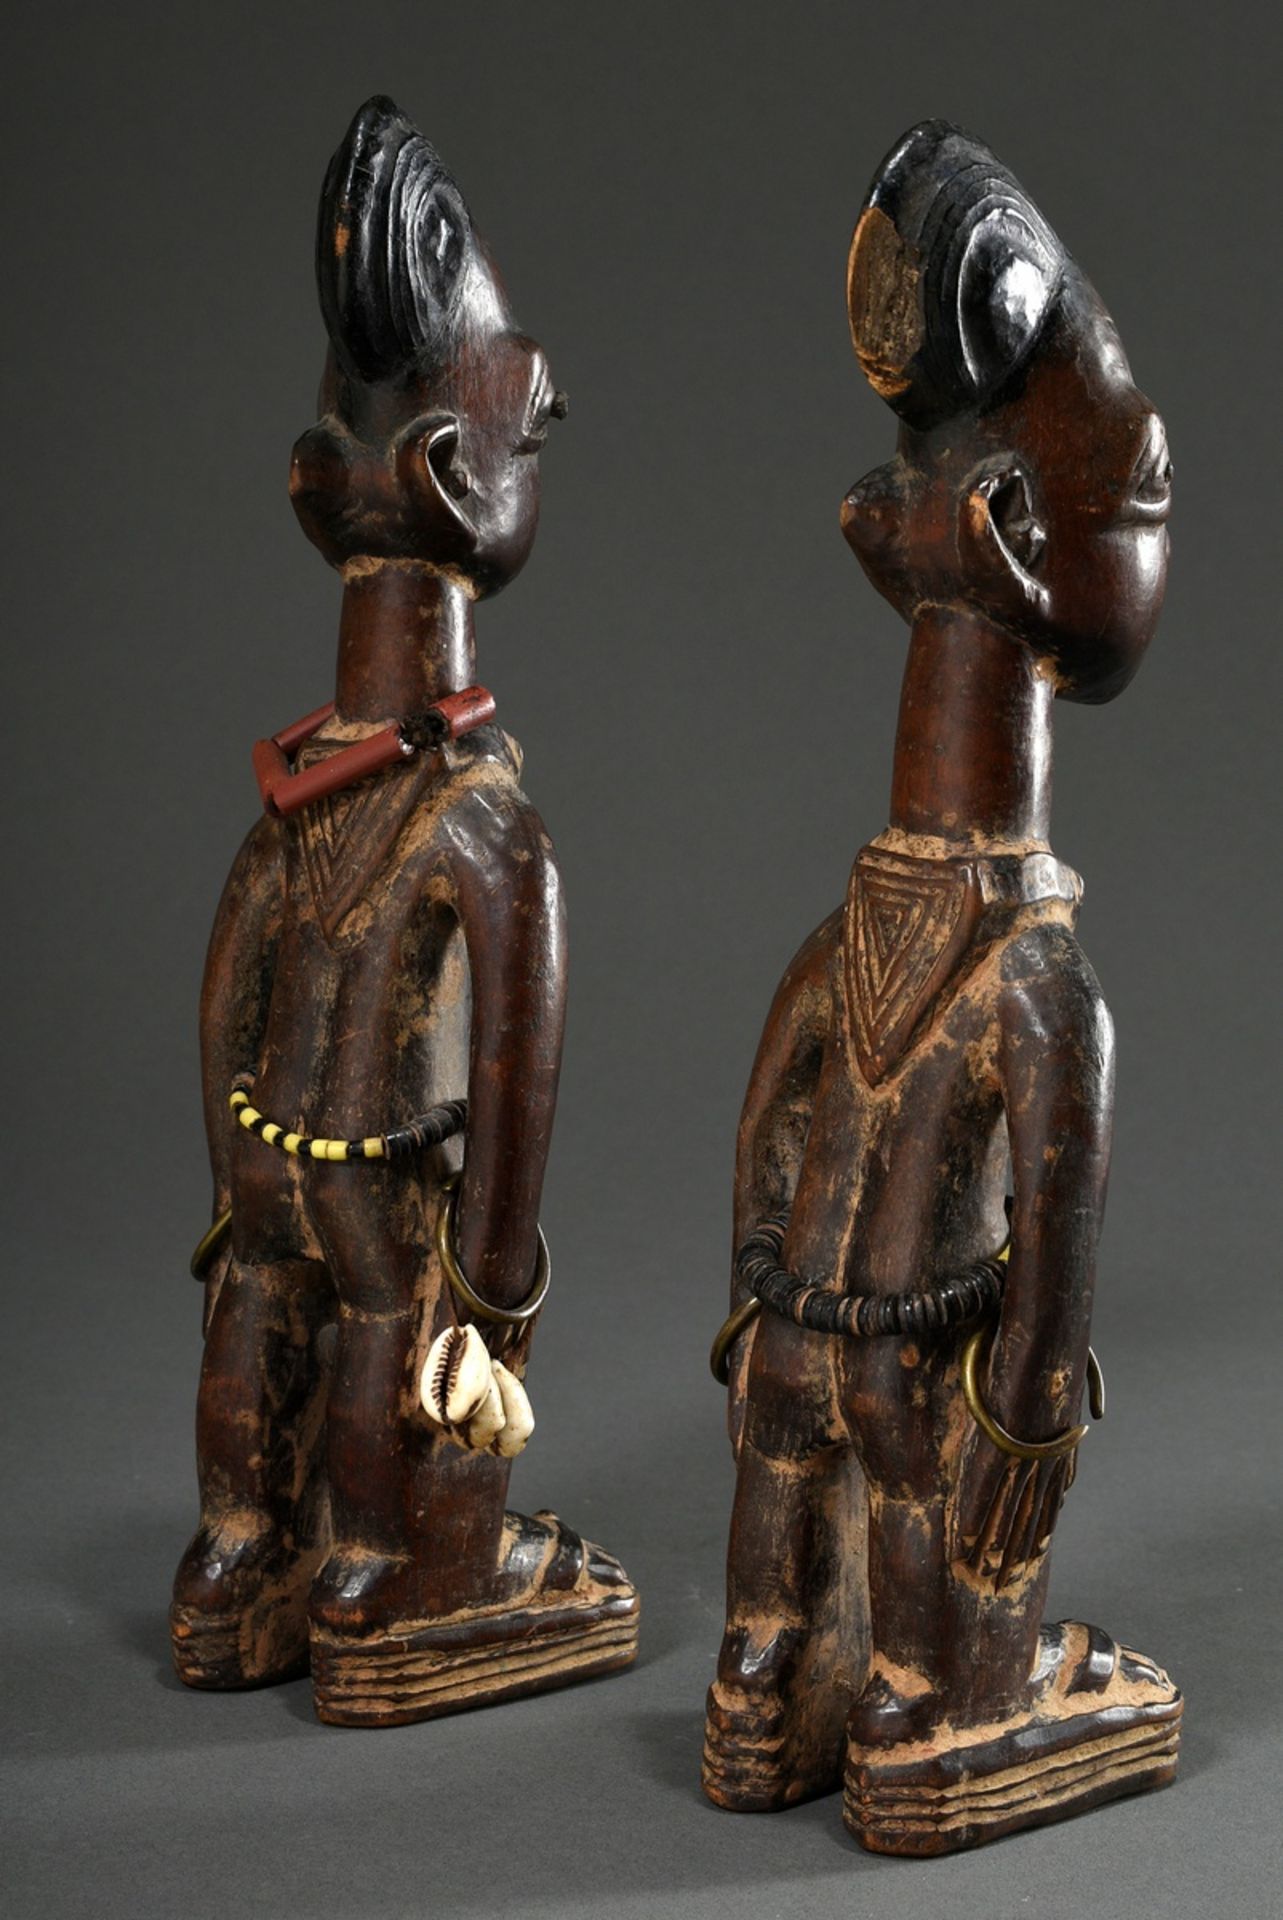 2 Male Yoruba/Abeokuta Ibeji twin figures with pearl jewellery, metal bracelets and separately carv - Image 2 of 7